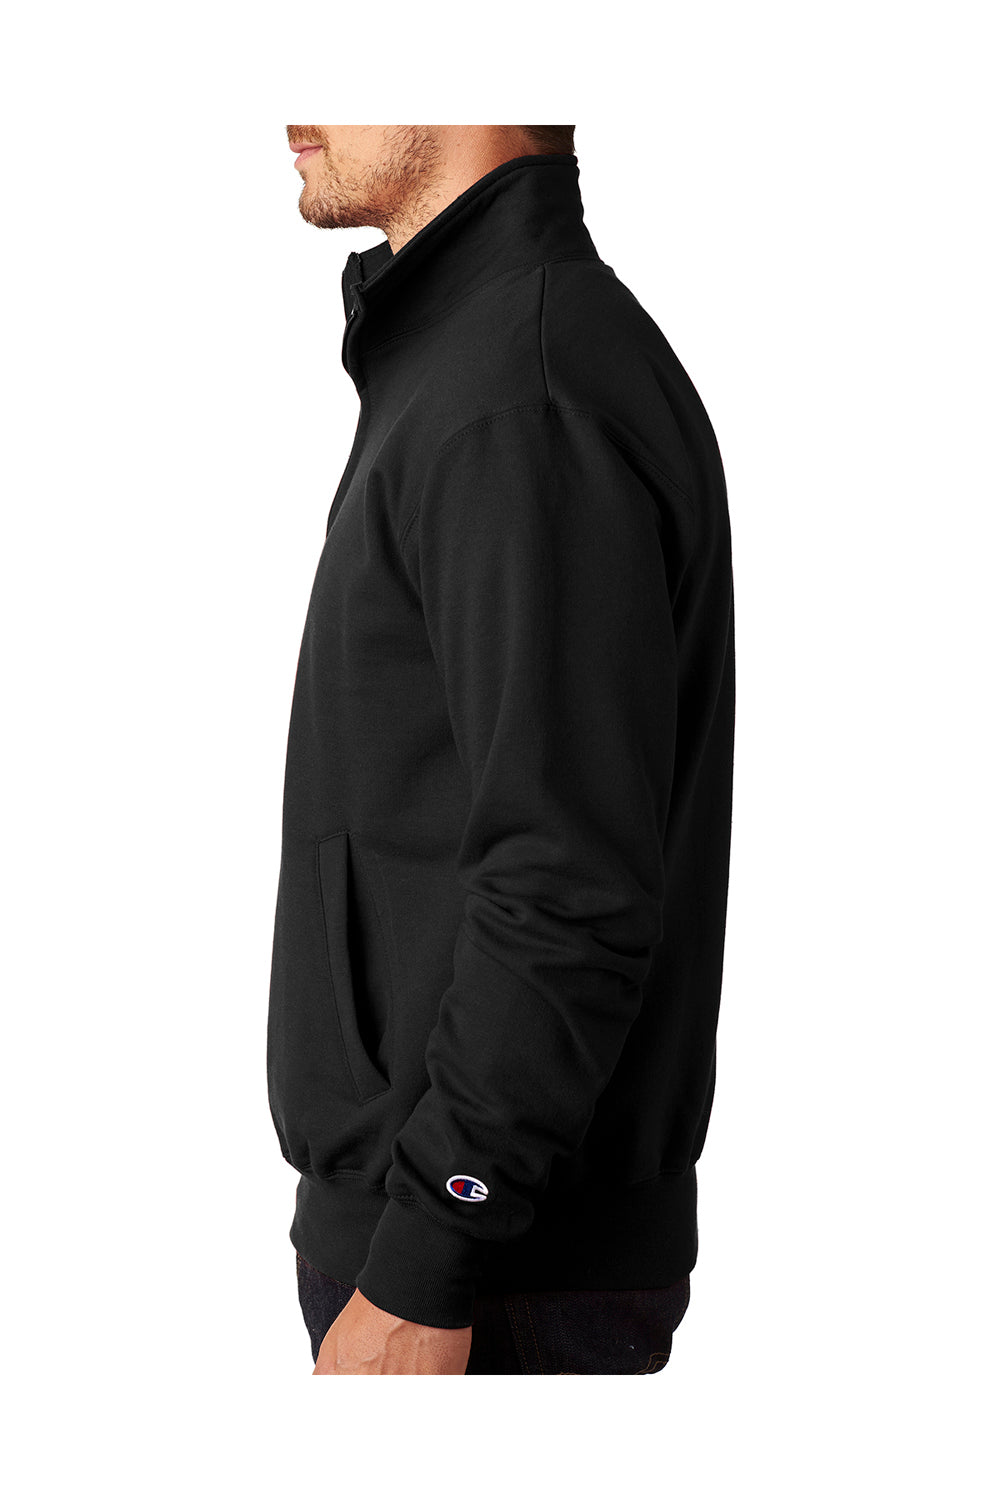 Champion S400 Mens Double Dry Eco Moisture Wicking Fleece 1/4 Zip Sweatshirt Black Side